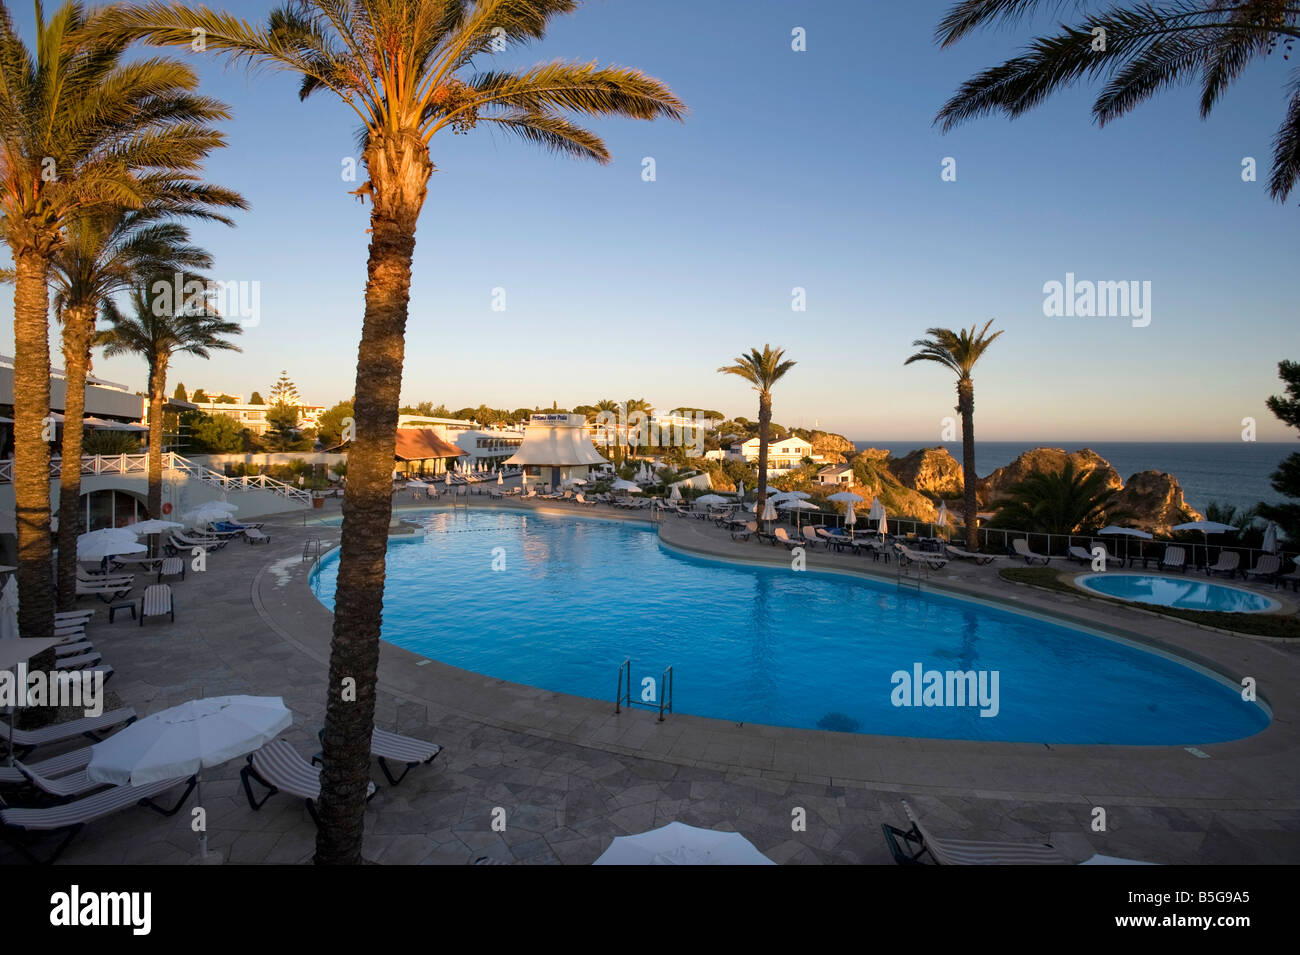 La piscina del hotel,Algarve Portugal Foto de stock